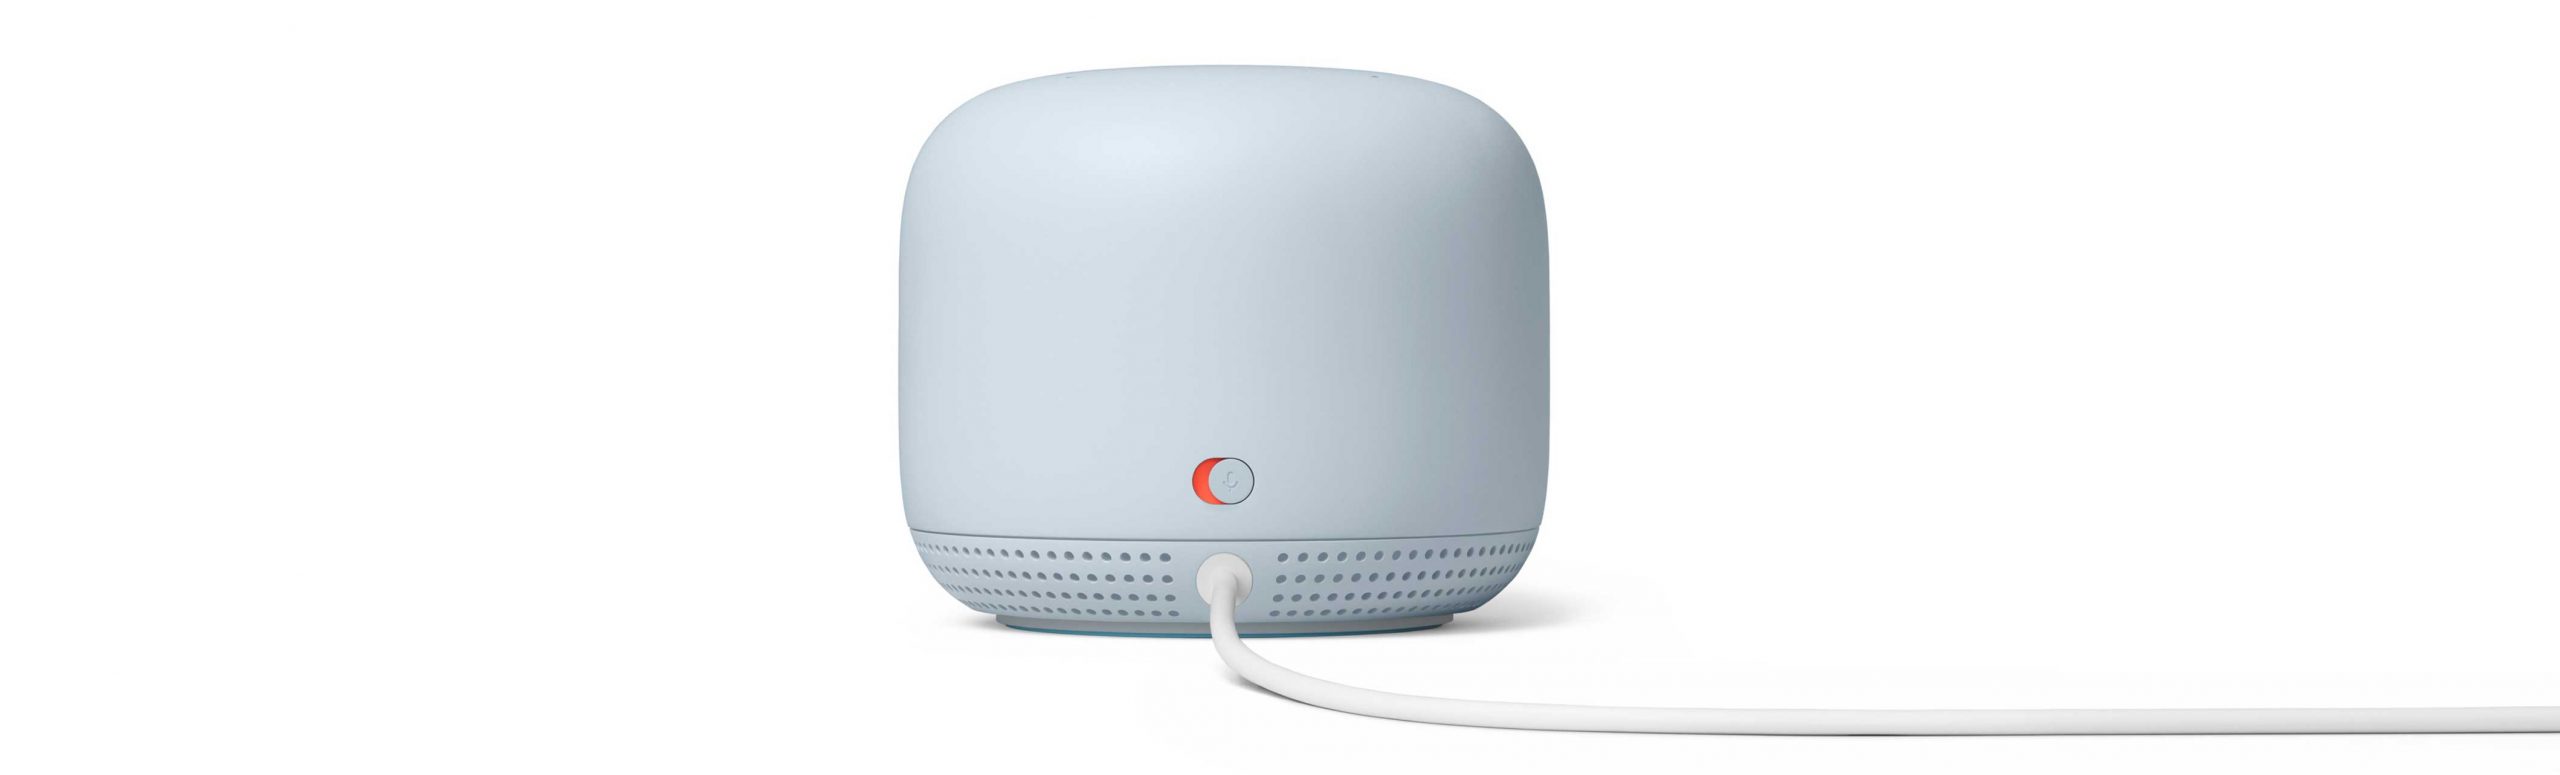 Google Nest Wi-Fi displayed against white background